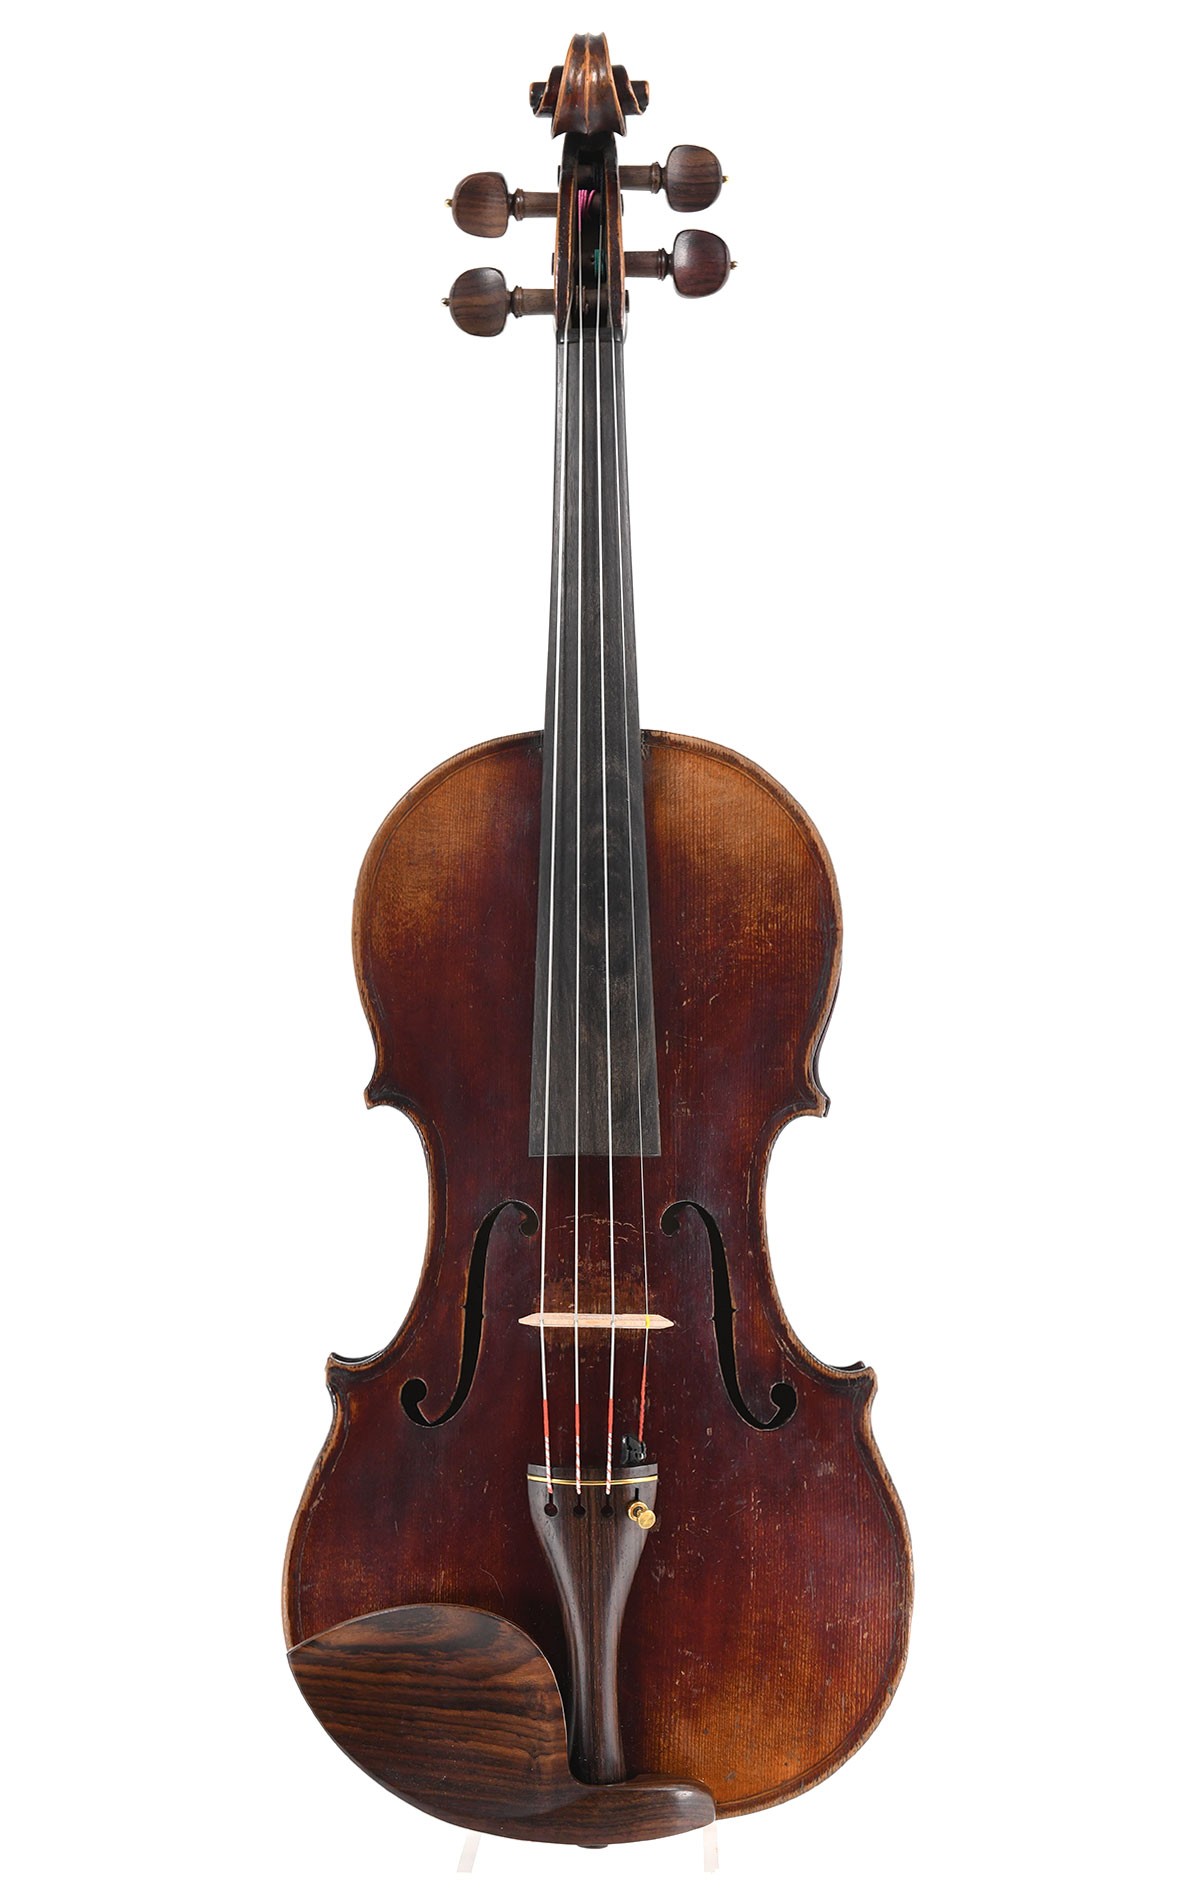 Antique violin from Mittenwald, circa 1850 